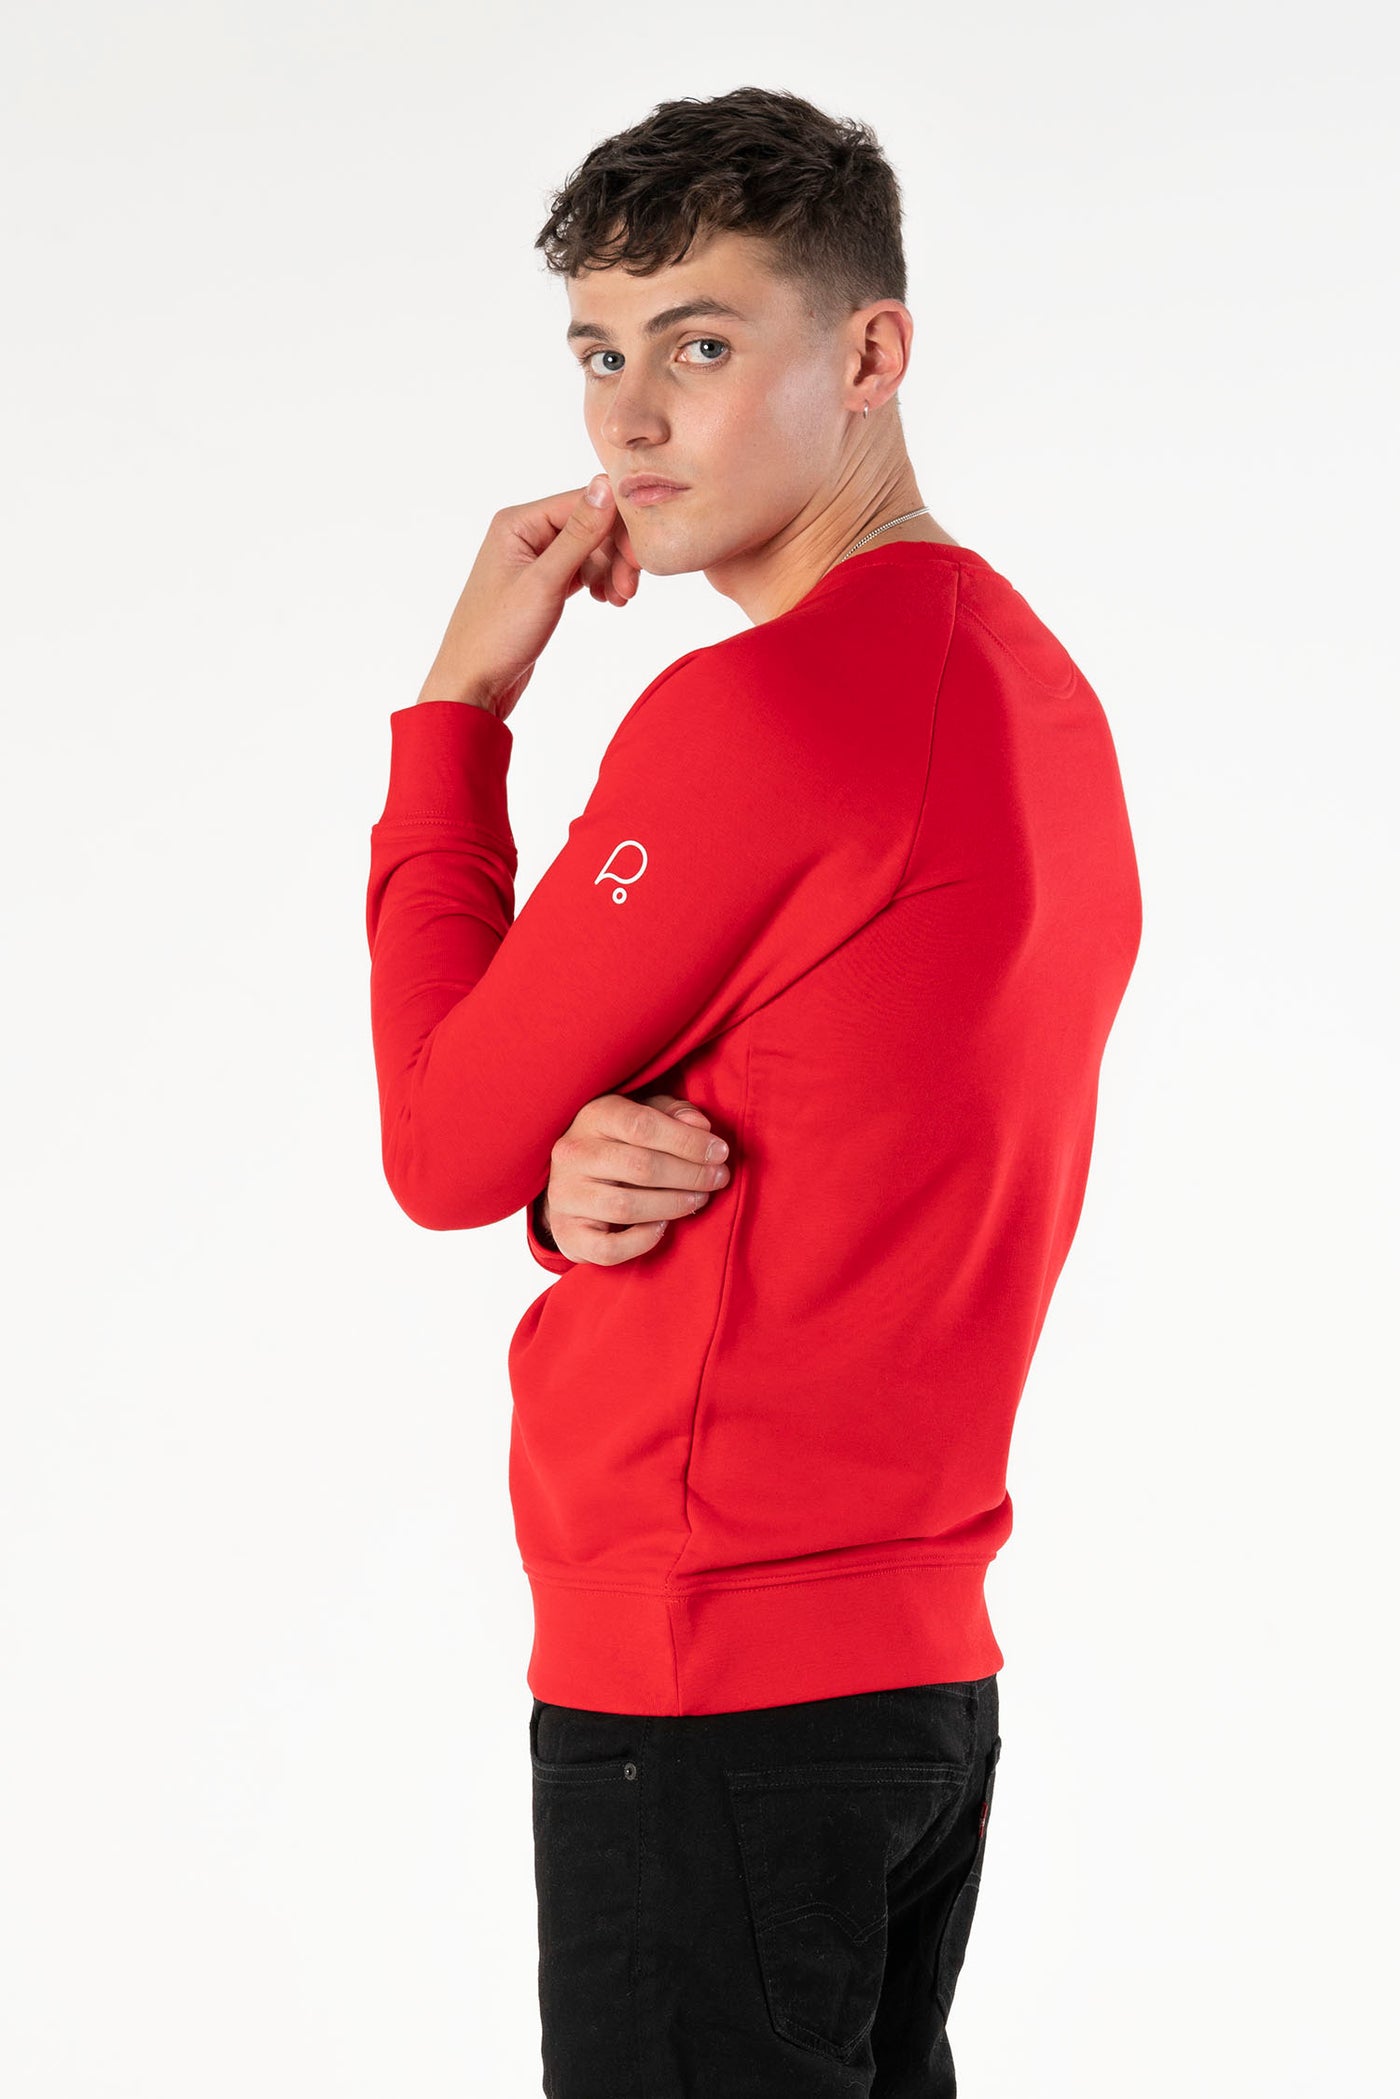 Signature Red Sweatshirt-Sweatshirts-PIRKANI